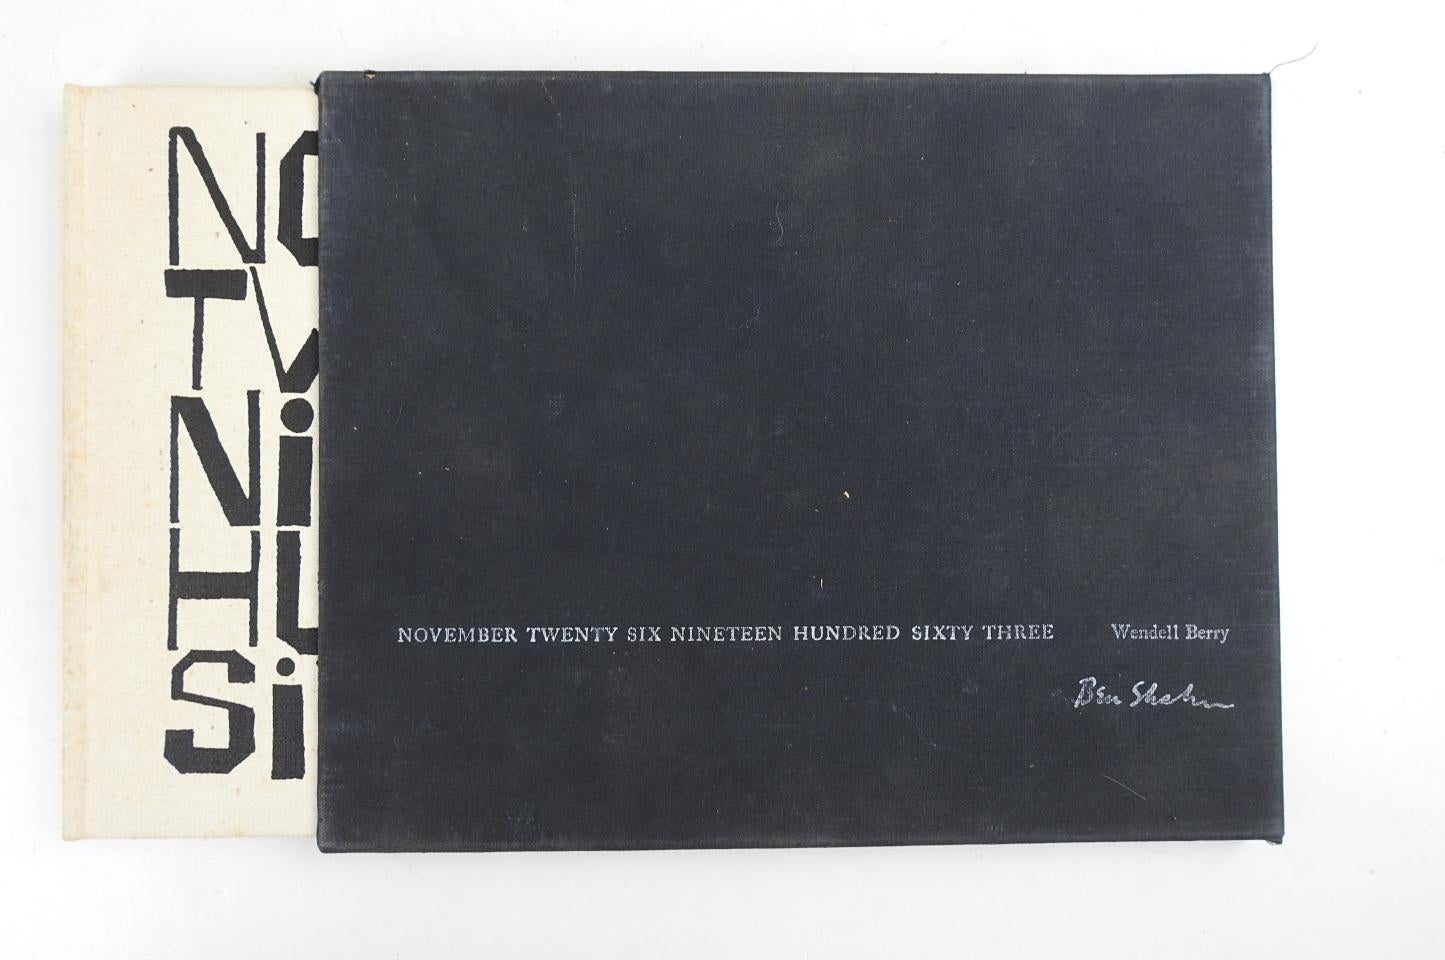 20th Century 1964 November Twenty Six Nineteen Hundred Sixty Three Book For Sale